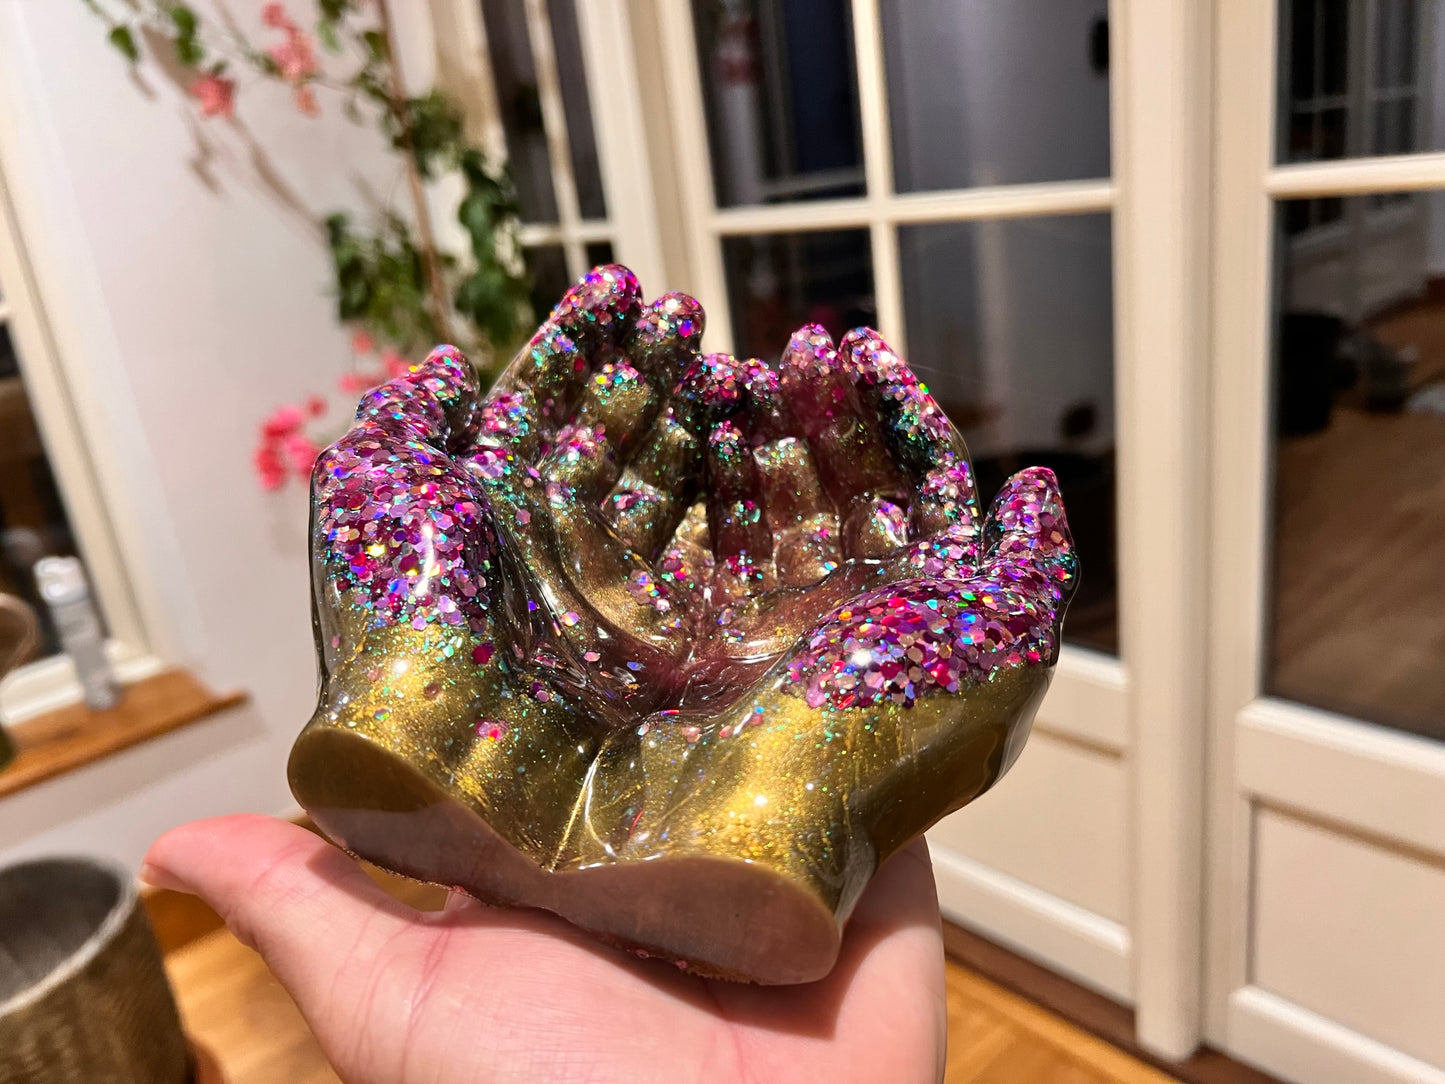 The Gold & Purple Glitter Hand Bowl